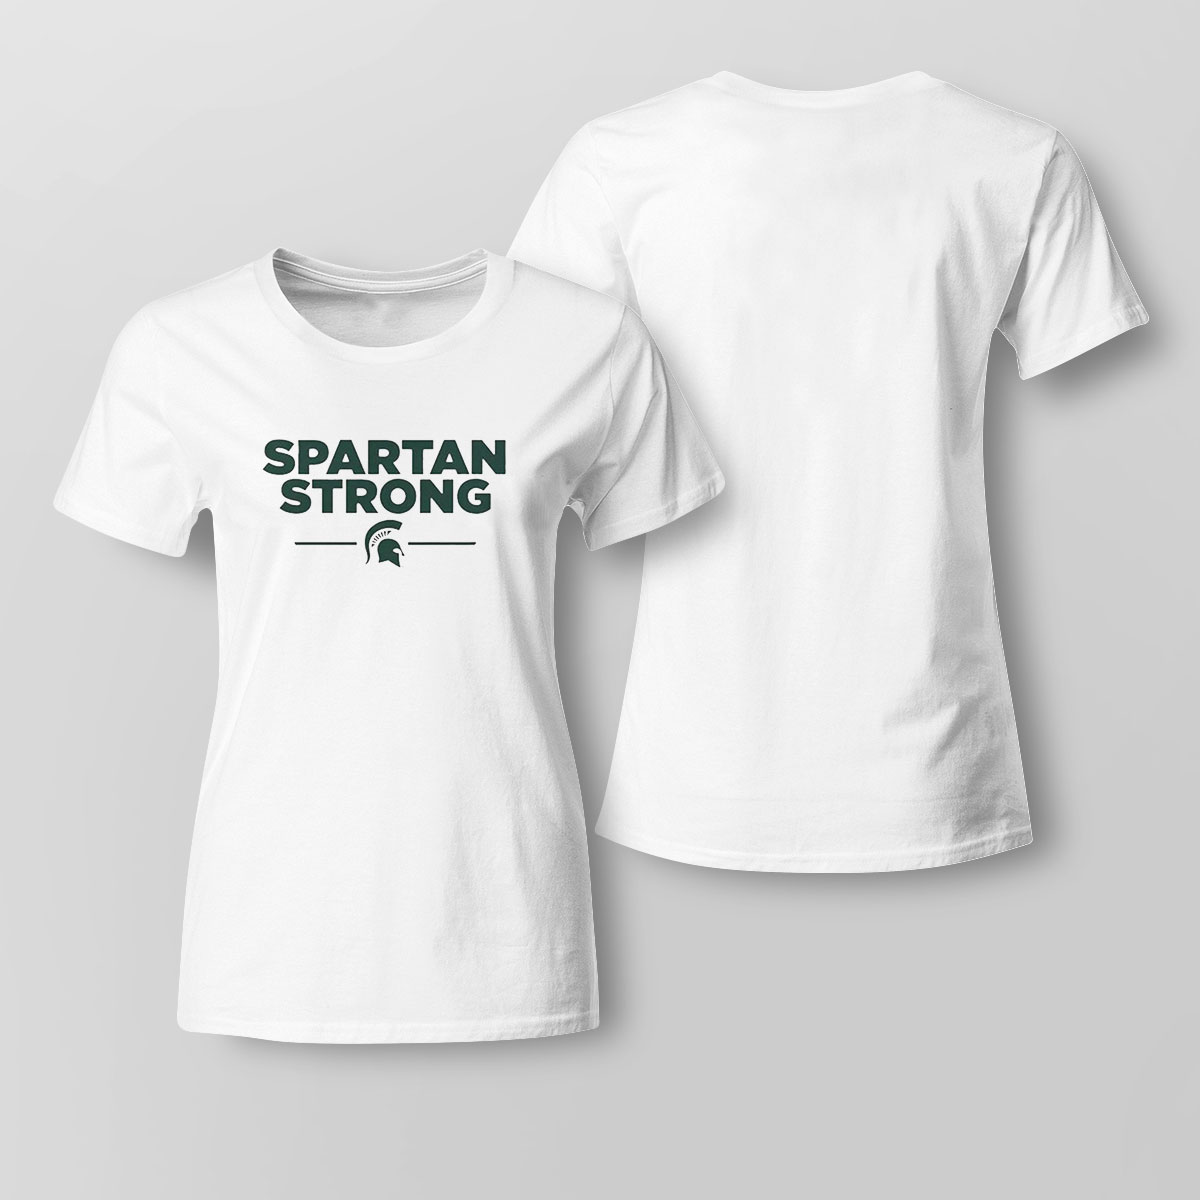 Spartan Strong Msu Shirt Hoodie